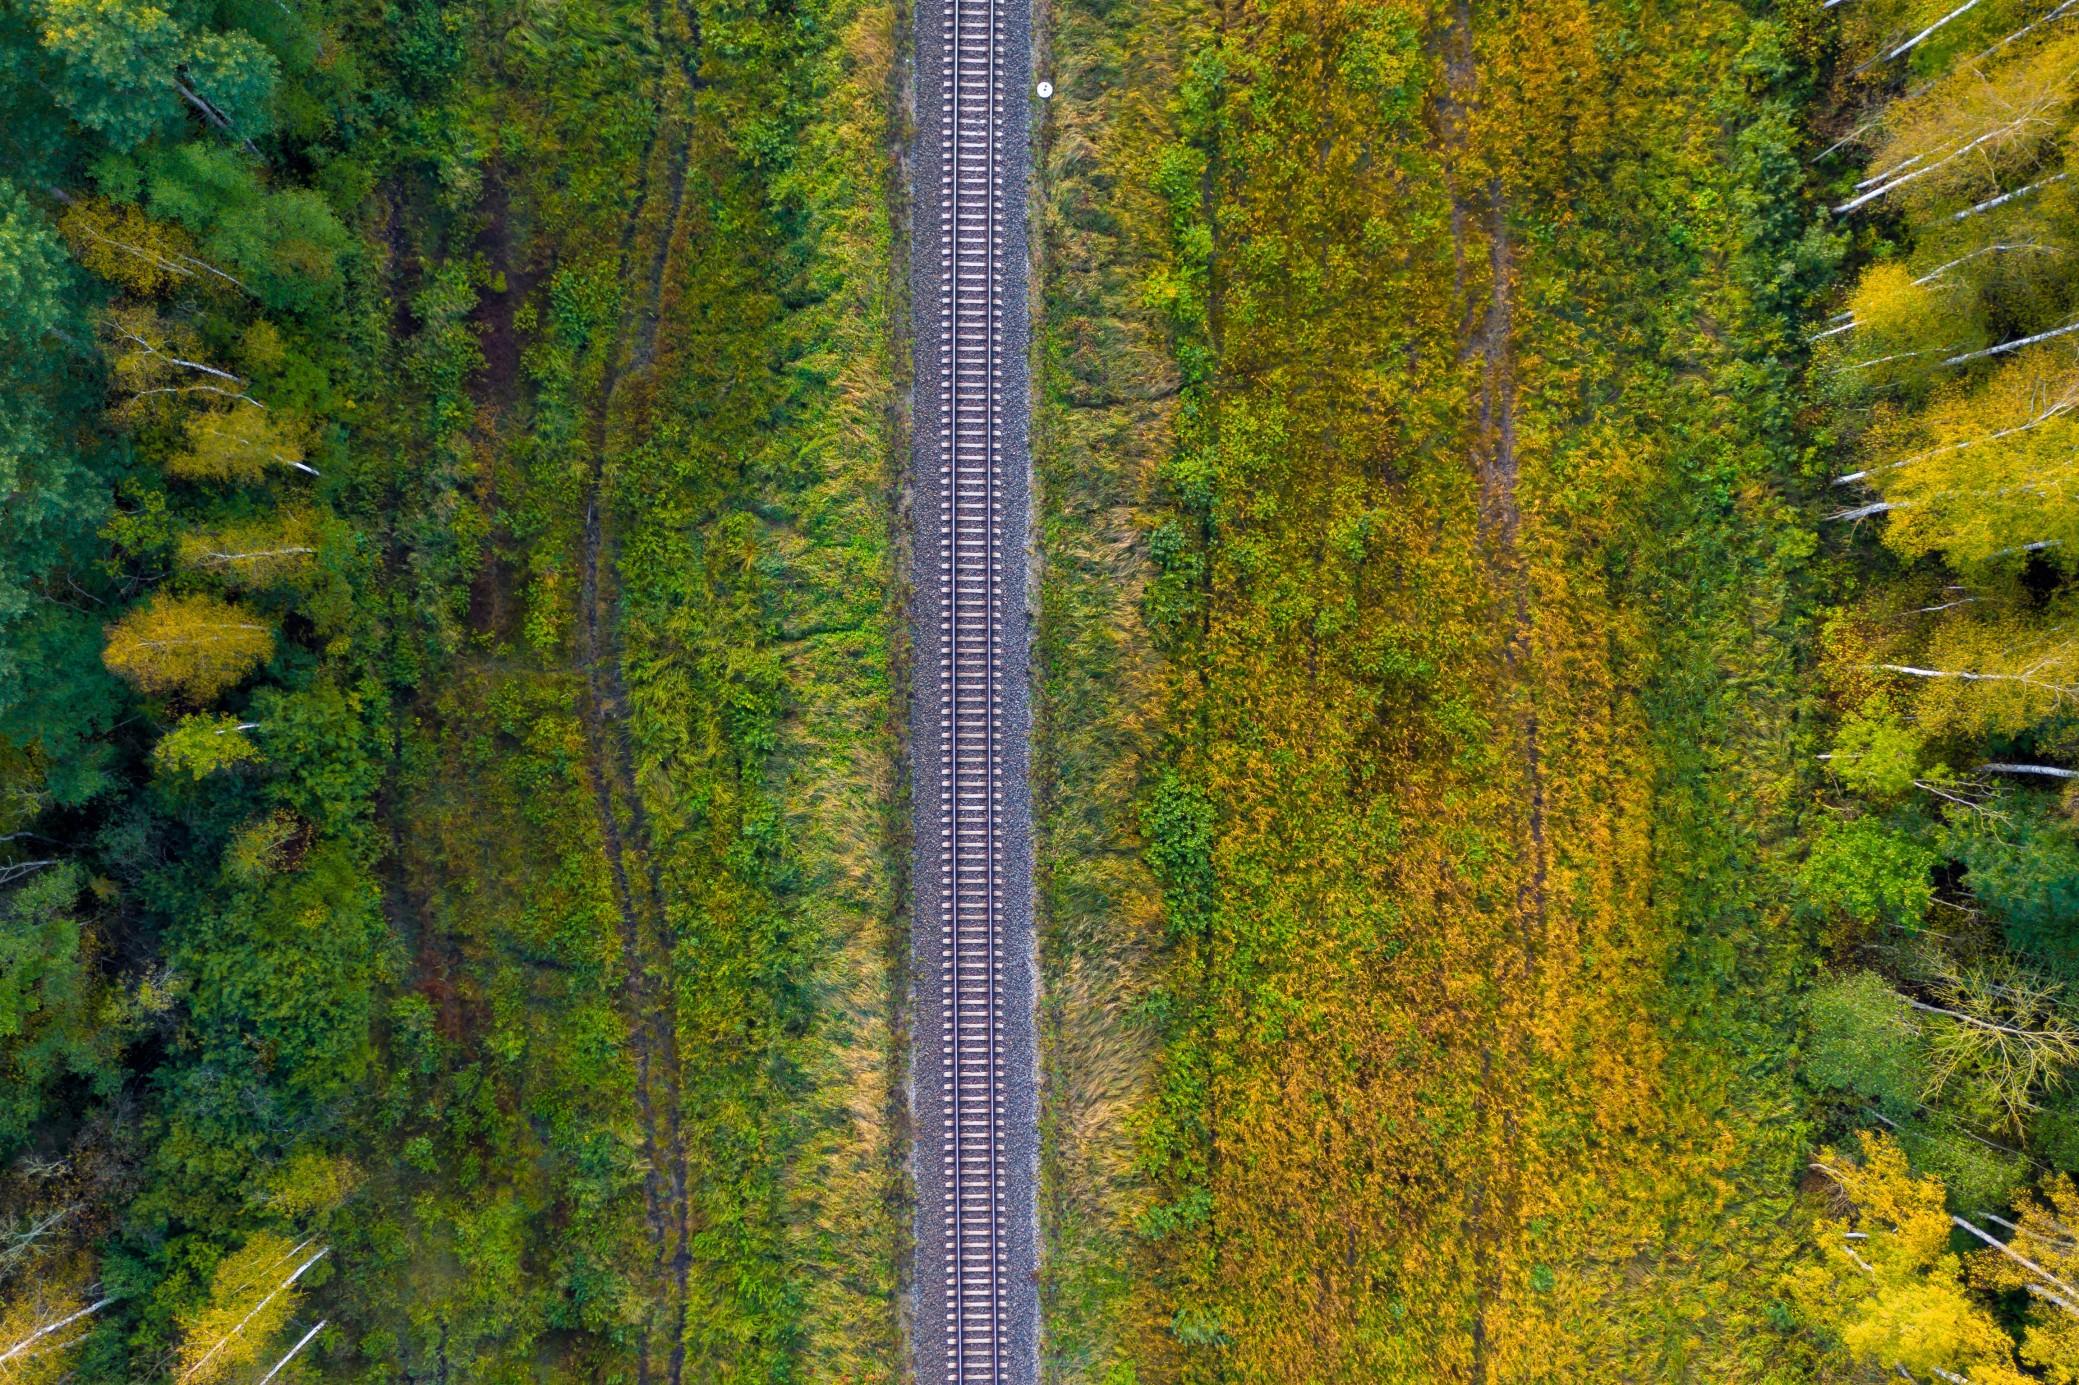 Rural train tracks